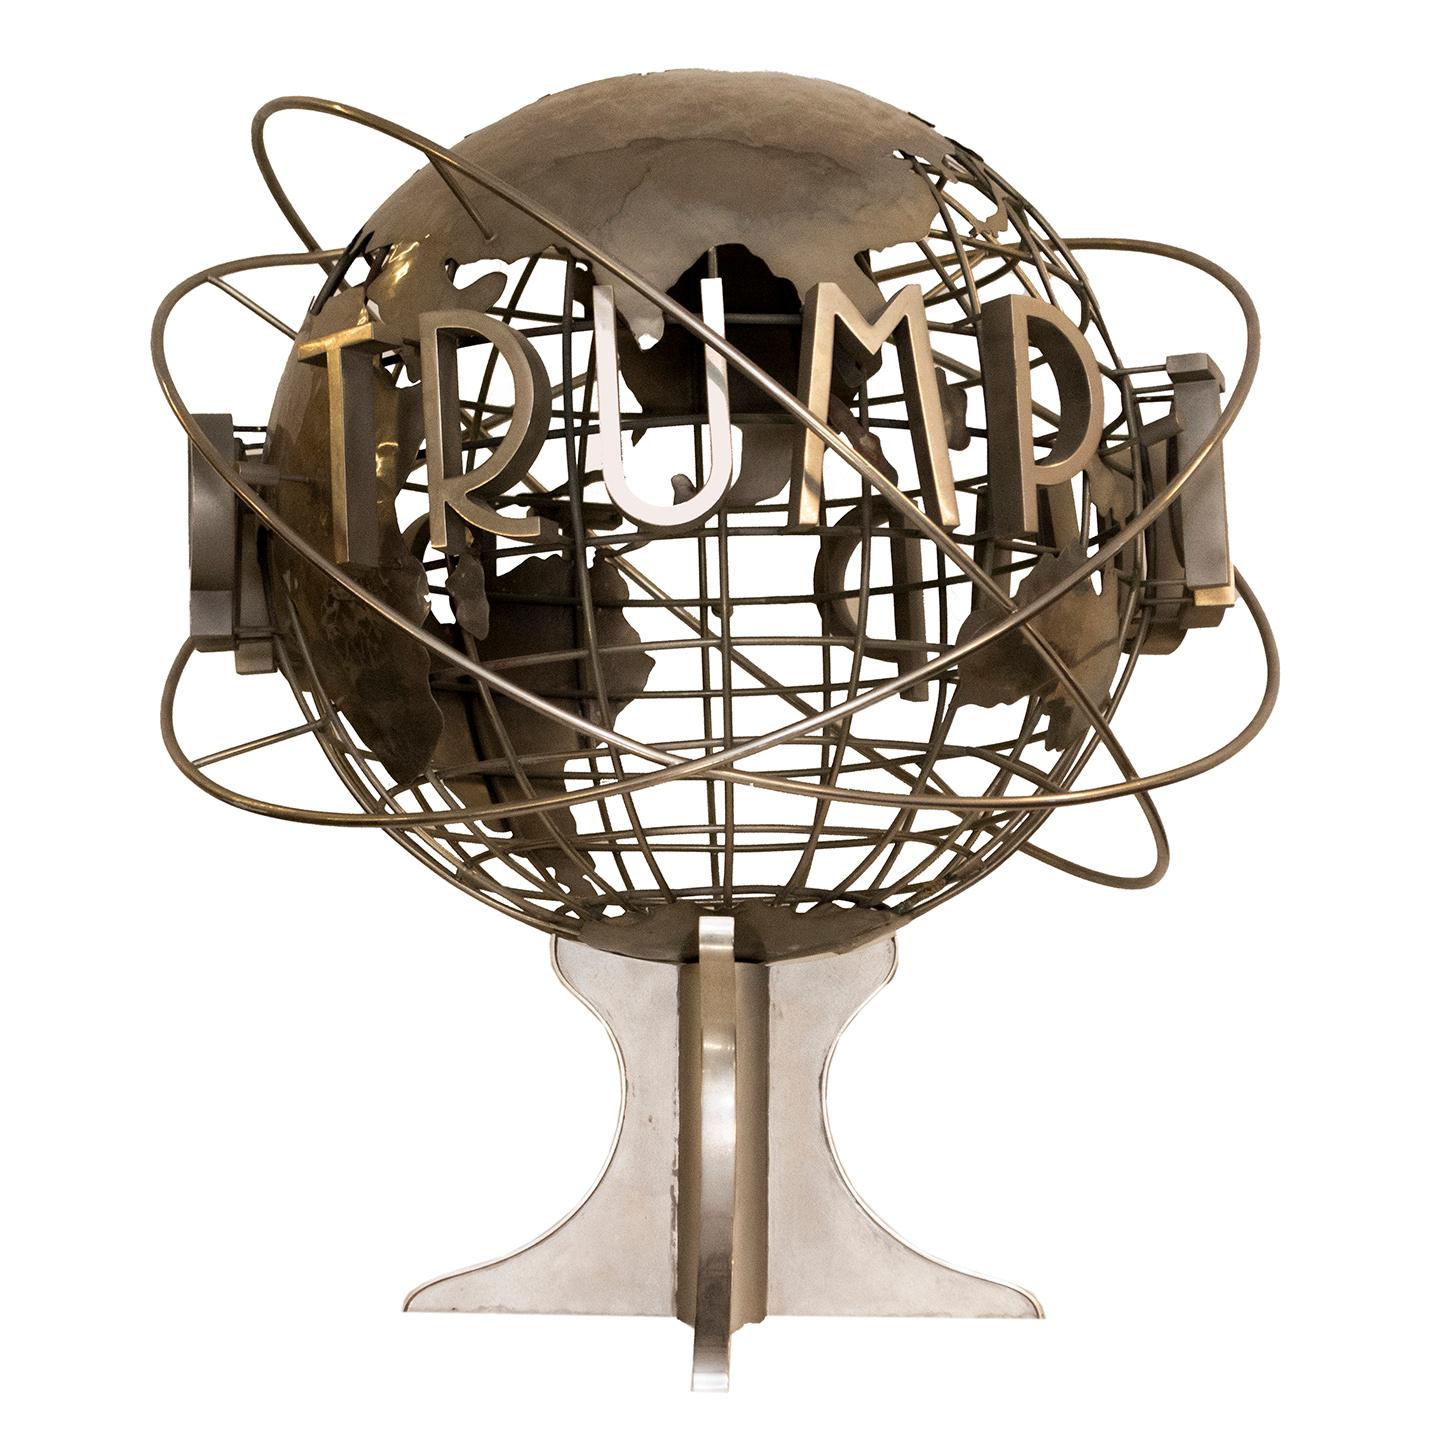 Metalwork Unisphere For Sale